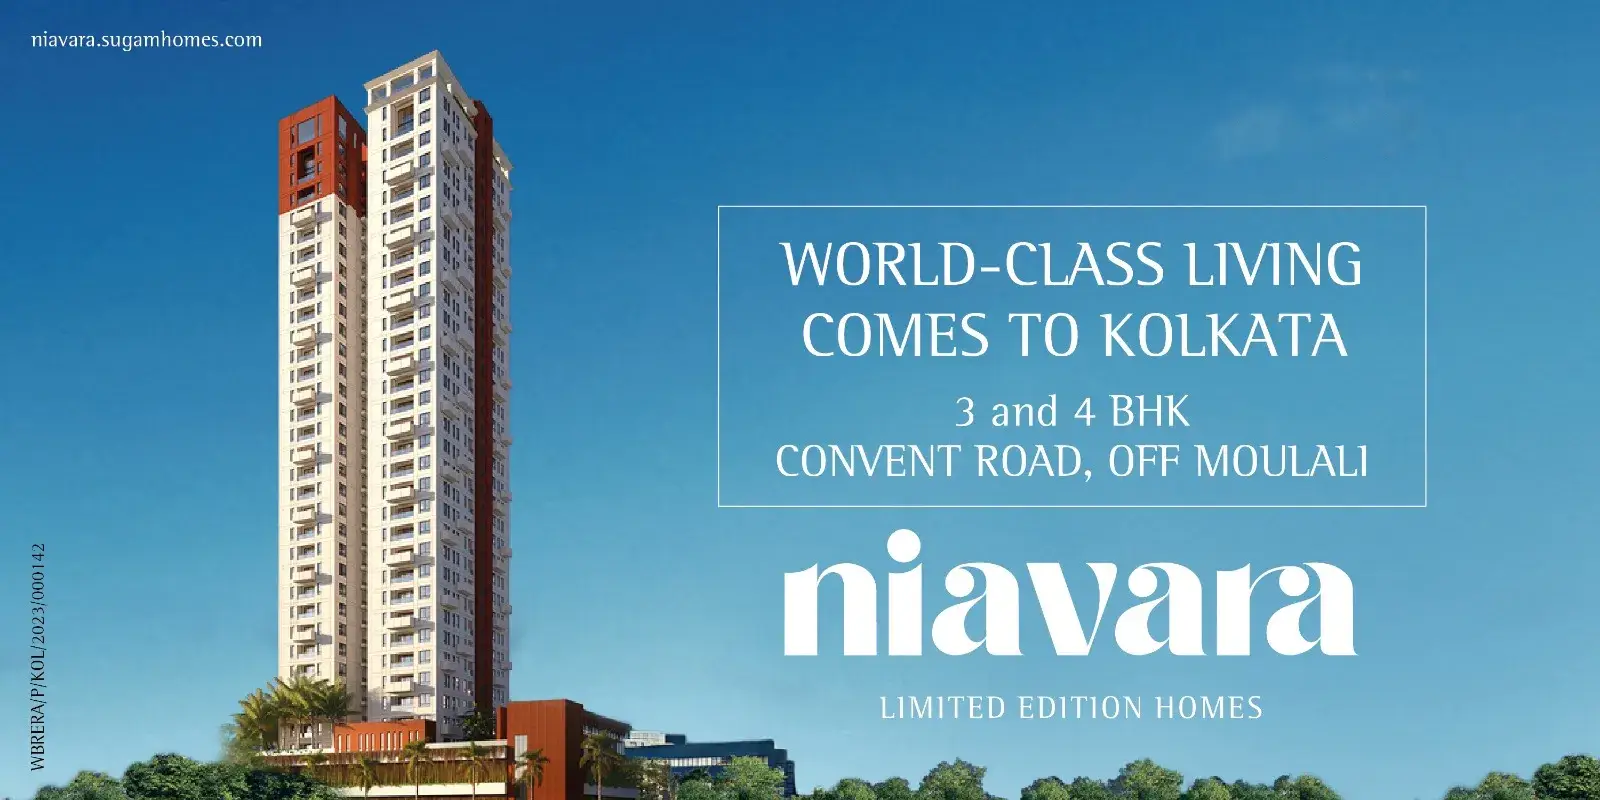 Niavara, Project by Top Real Estate Builders in Kolkata